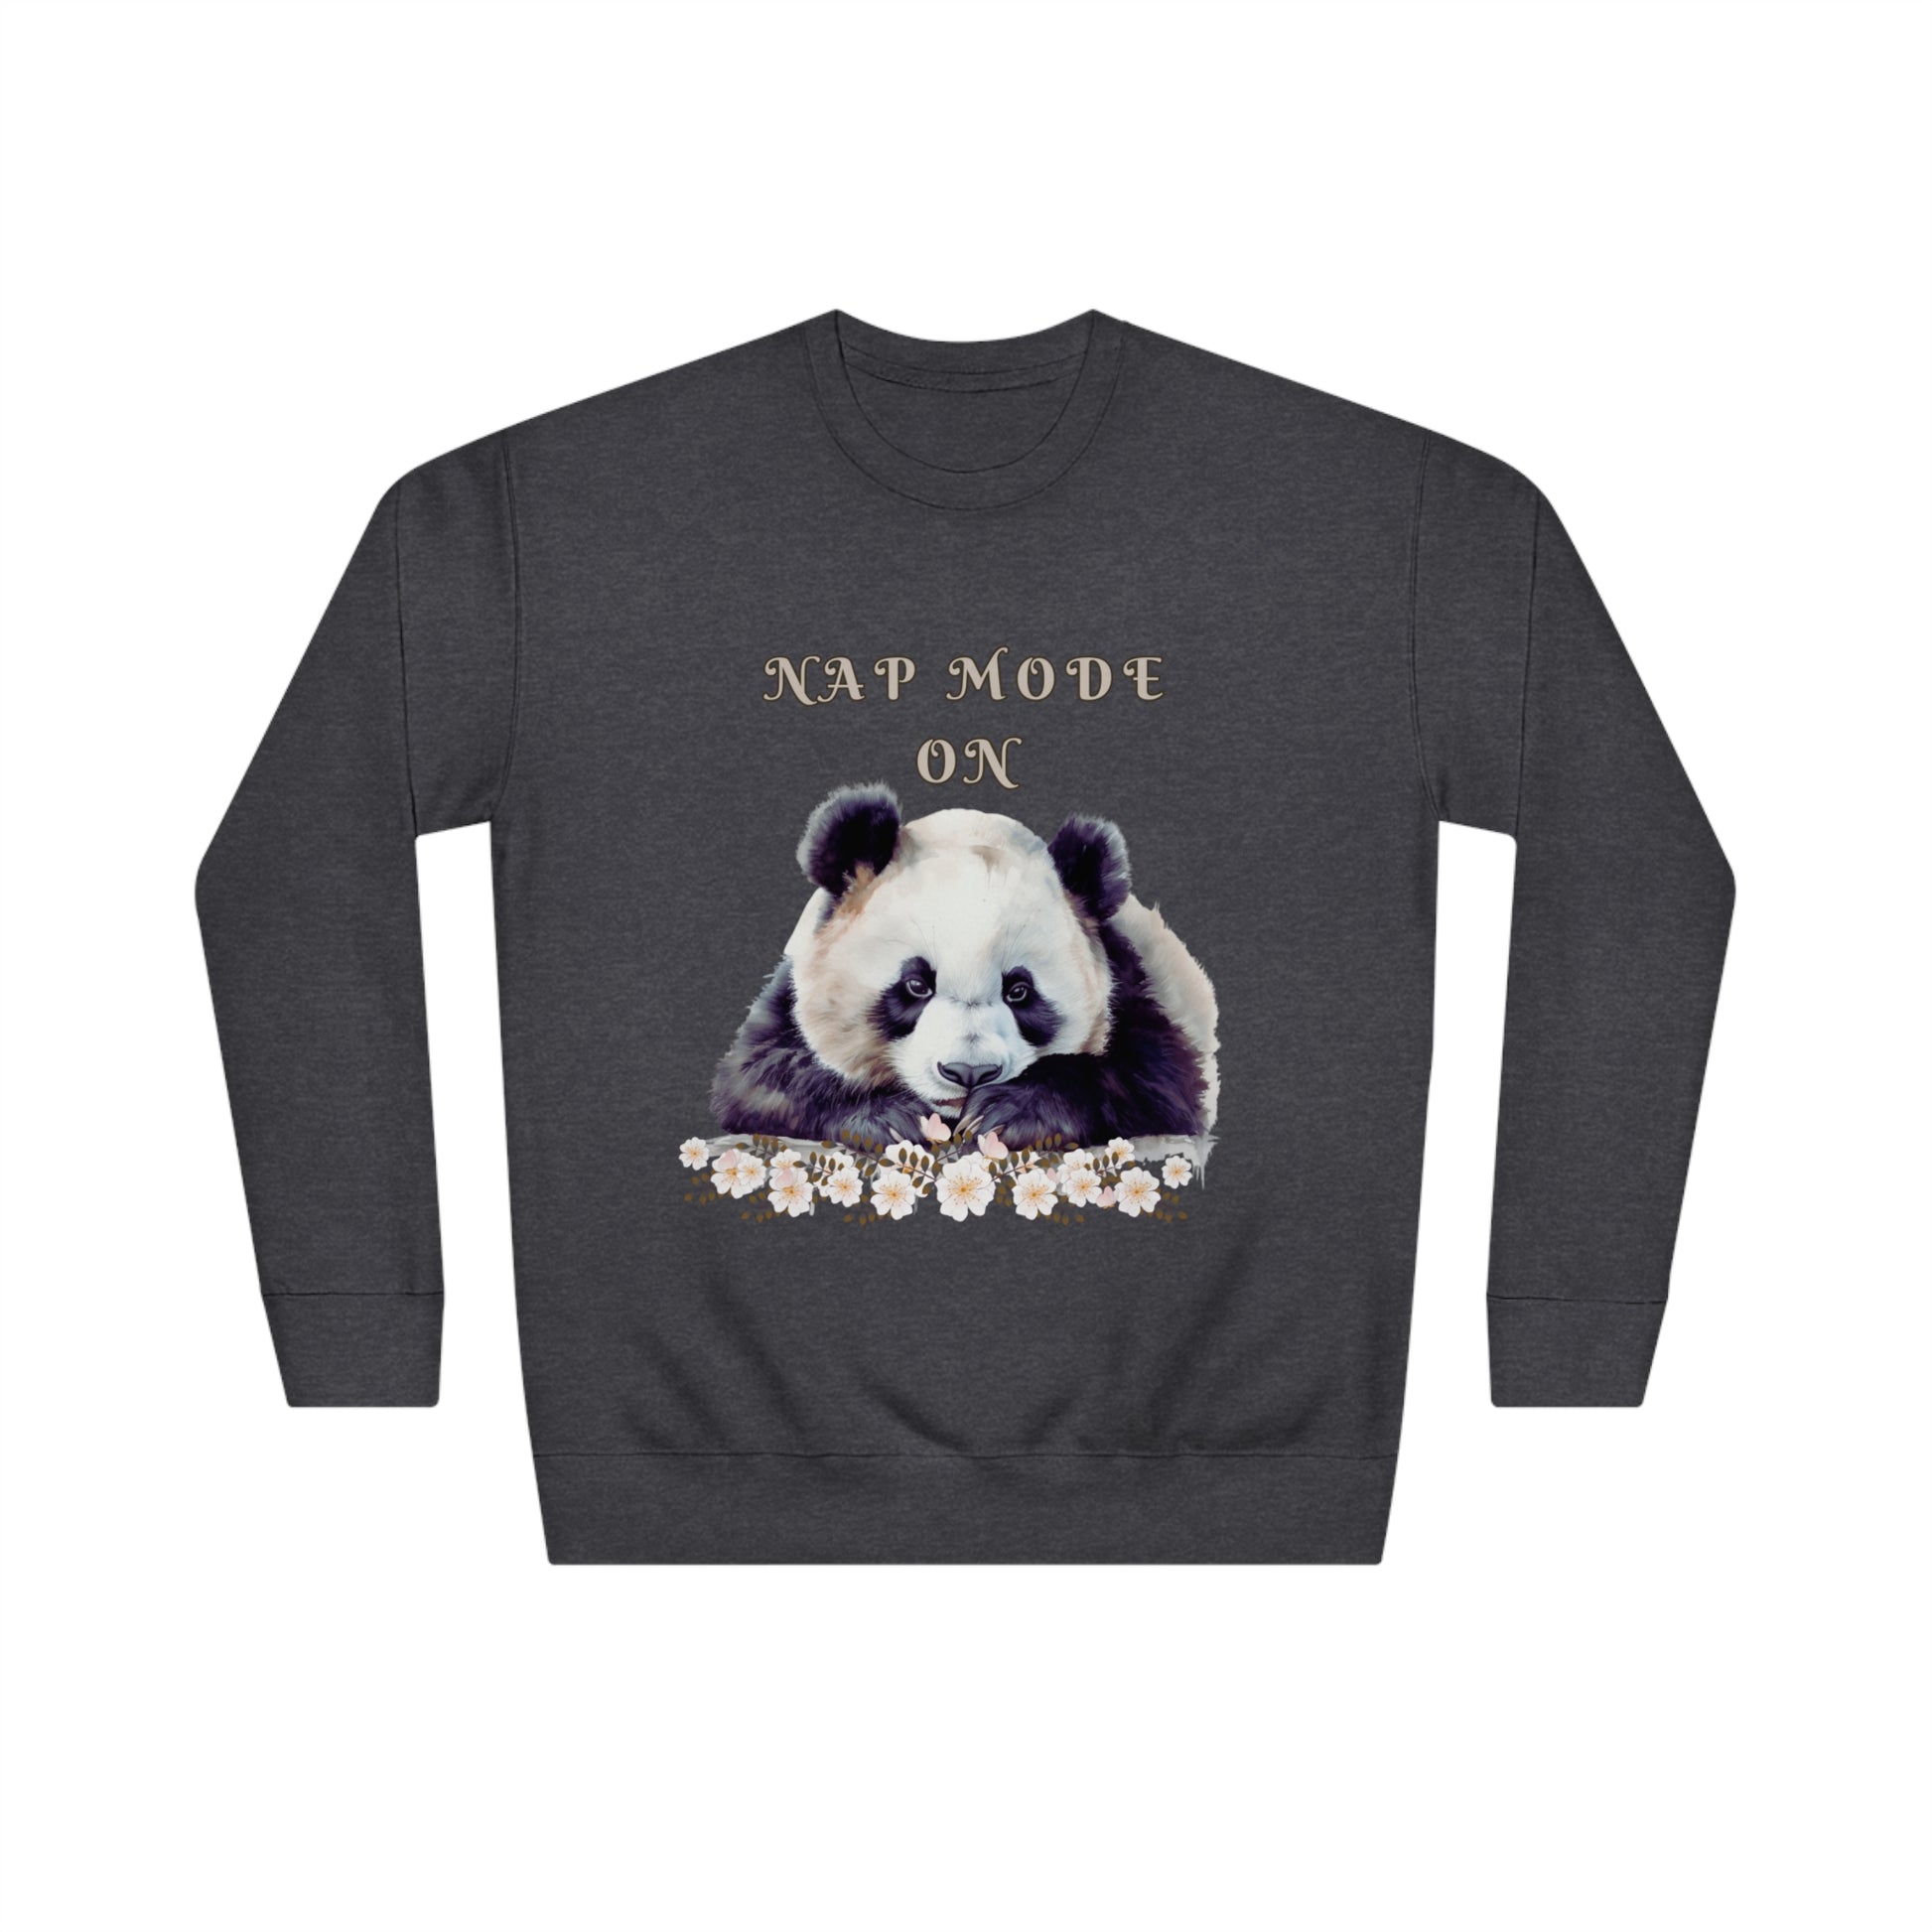 Lazy Panda Nap Mode Sweatshirt | Embrace Cozy Relaxation | Panda Lover Gift - Cozy Sweatshirt Sweatshirt Charcoal Heather S 